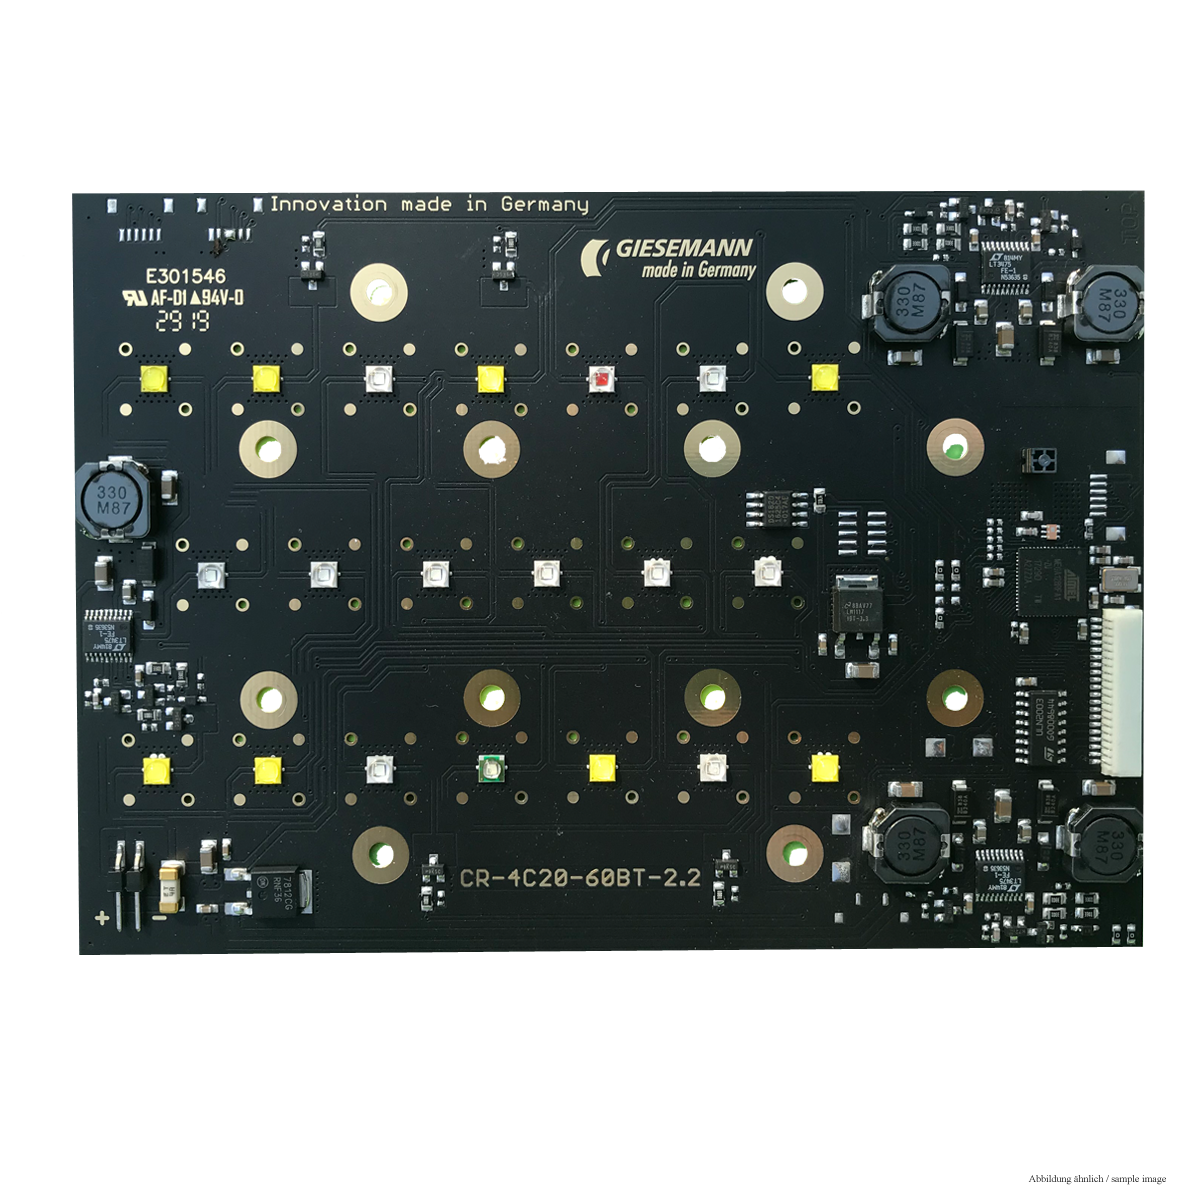 LED Board (AURORA) V2.2 V4 - Marine